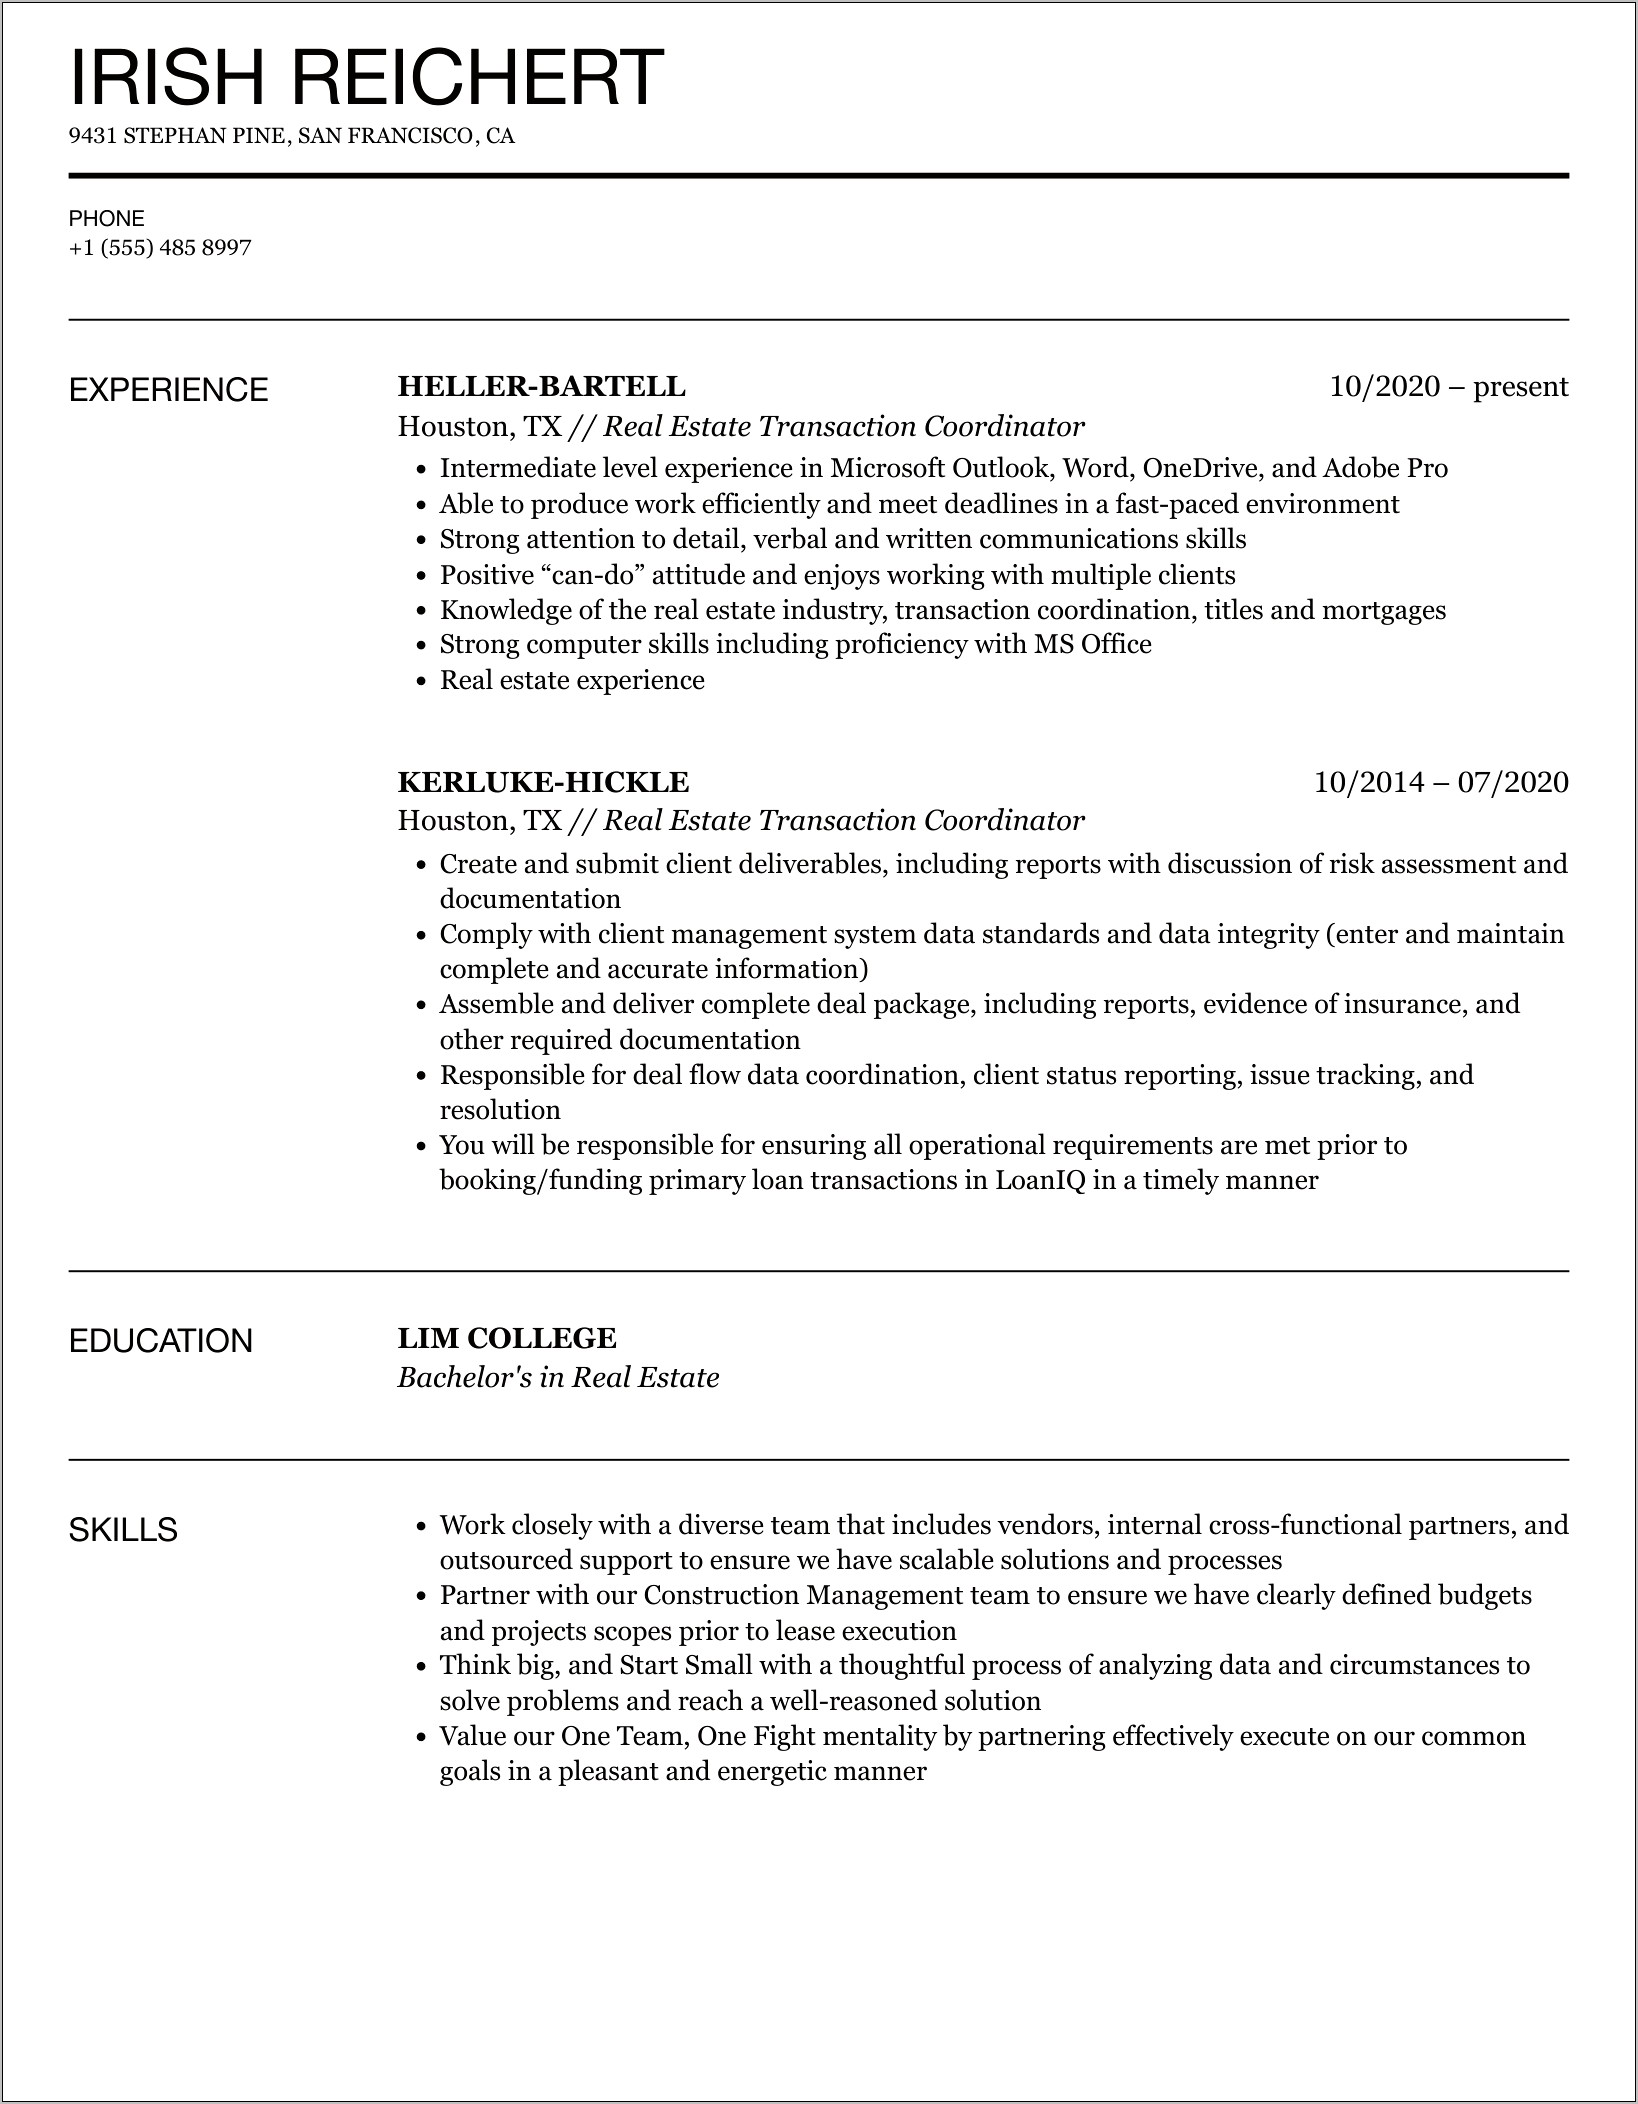 Sample Resume For Closing Coordinator